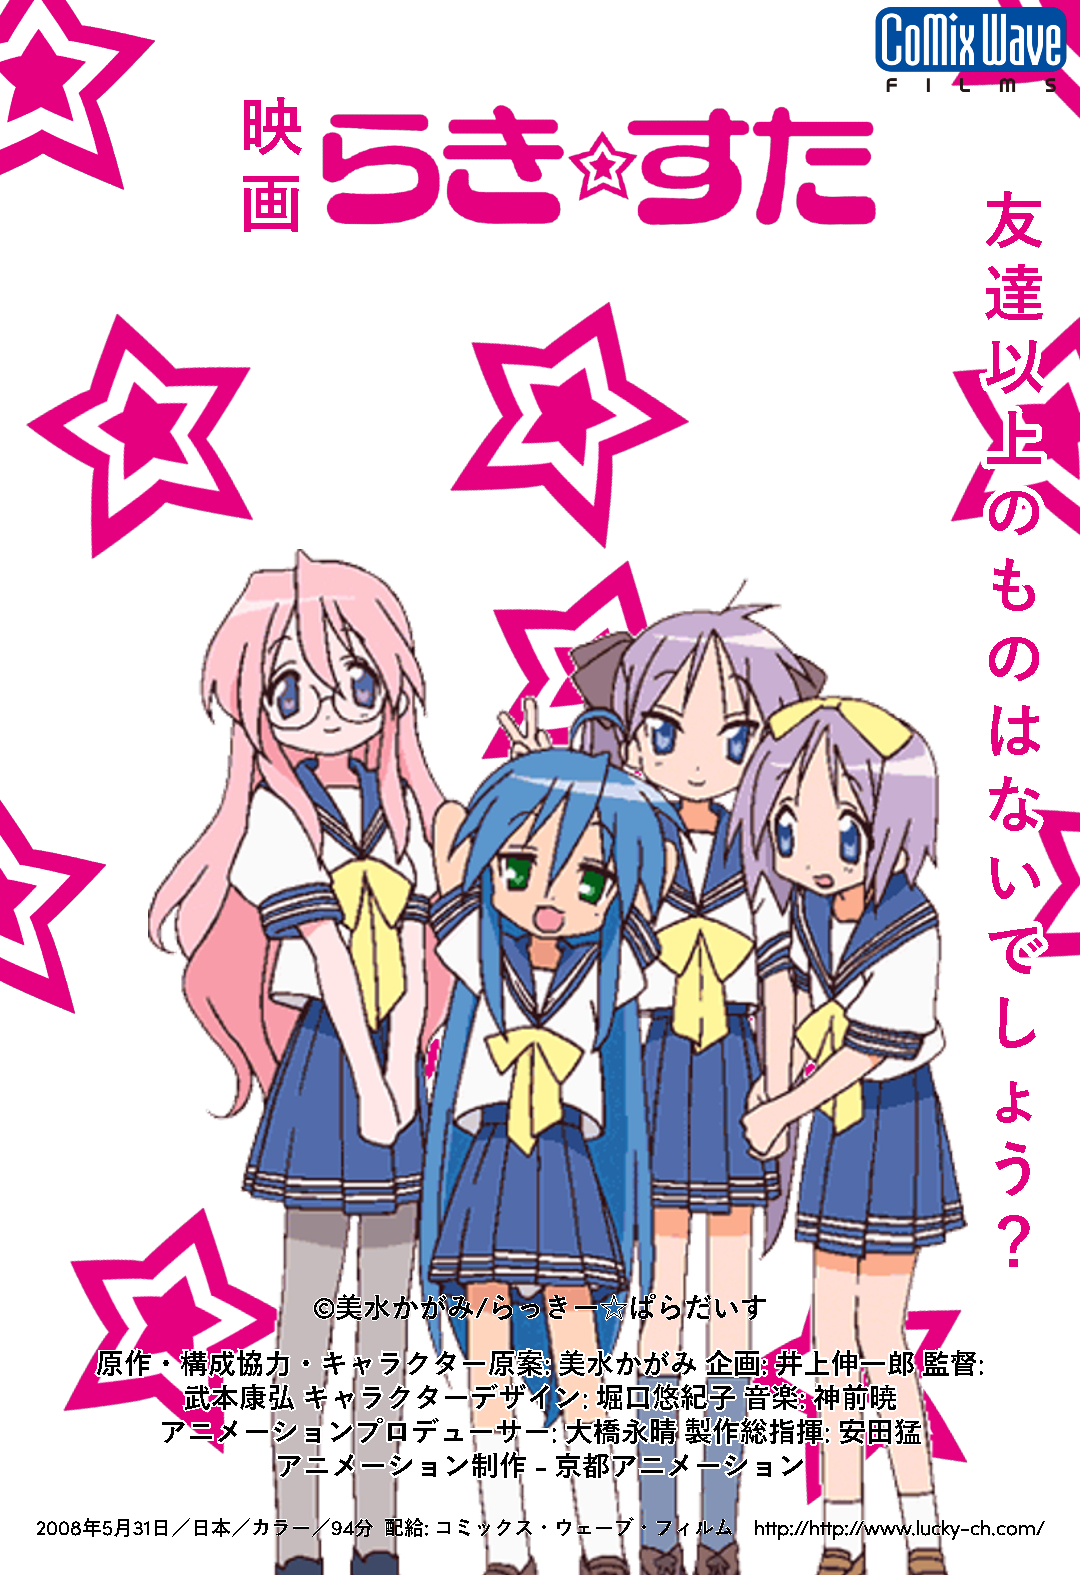 Konata!!! | Anime, Lucky star, Yandere anime